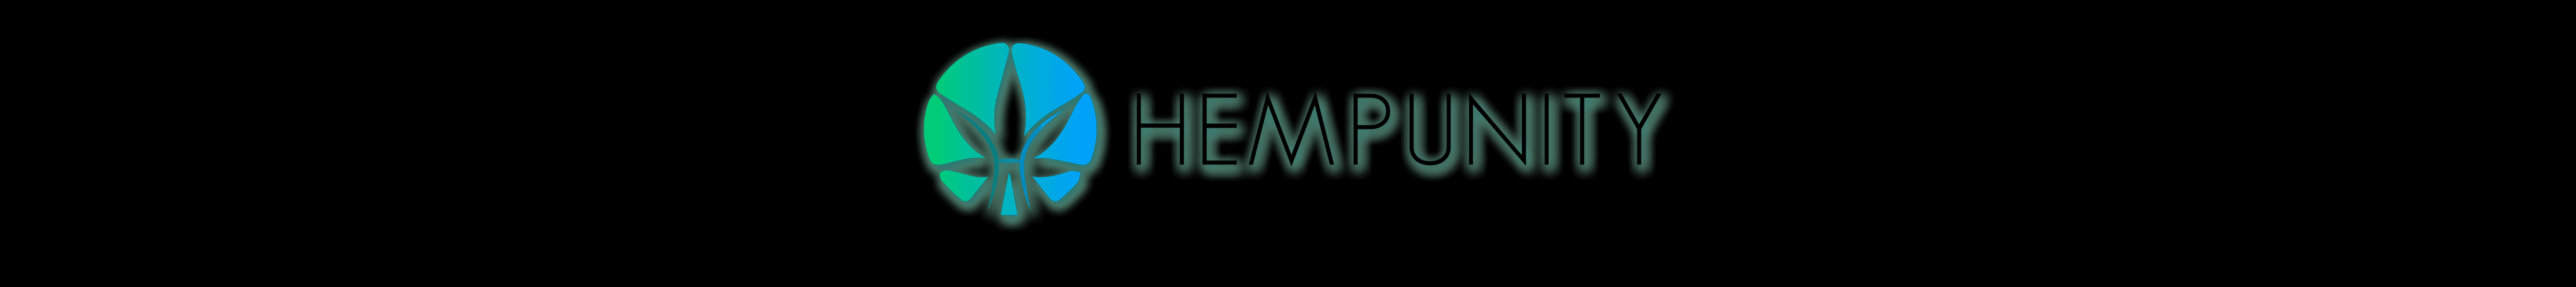 Hempunity バナー